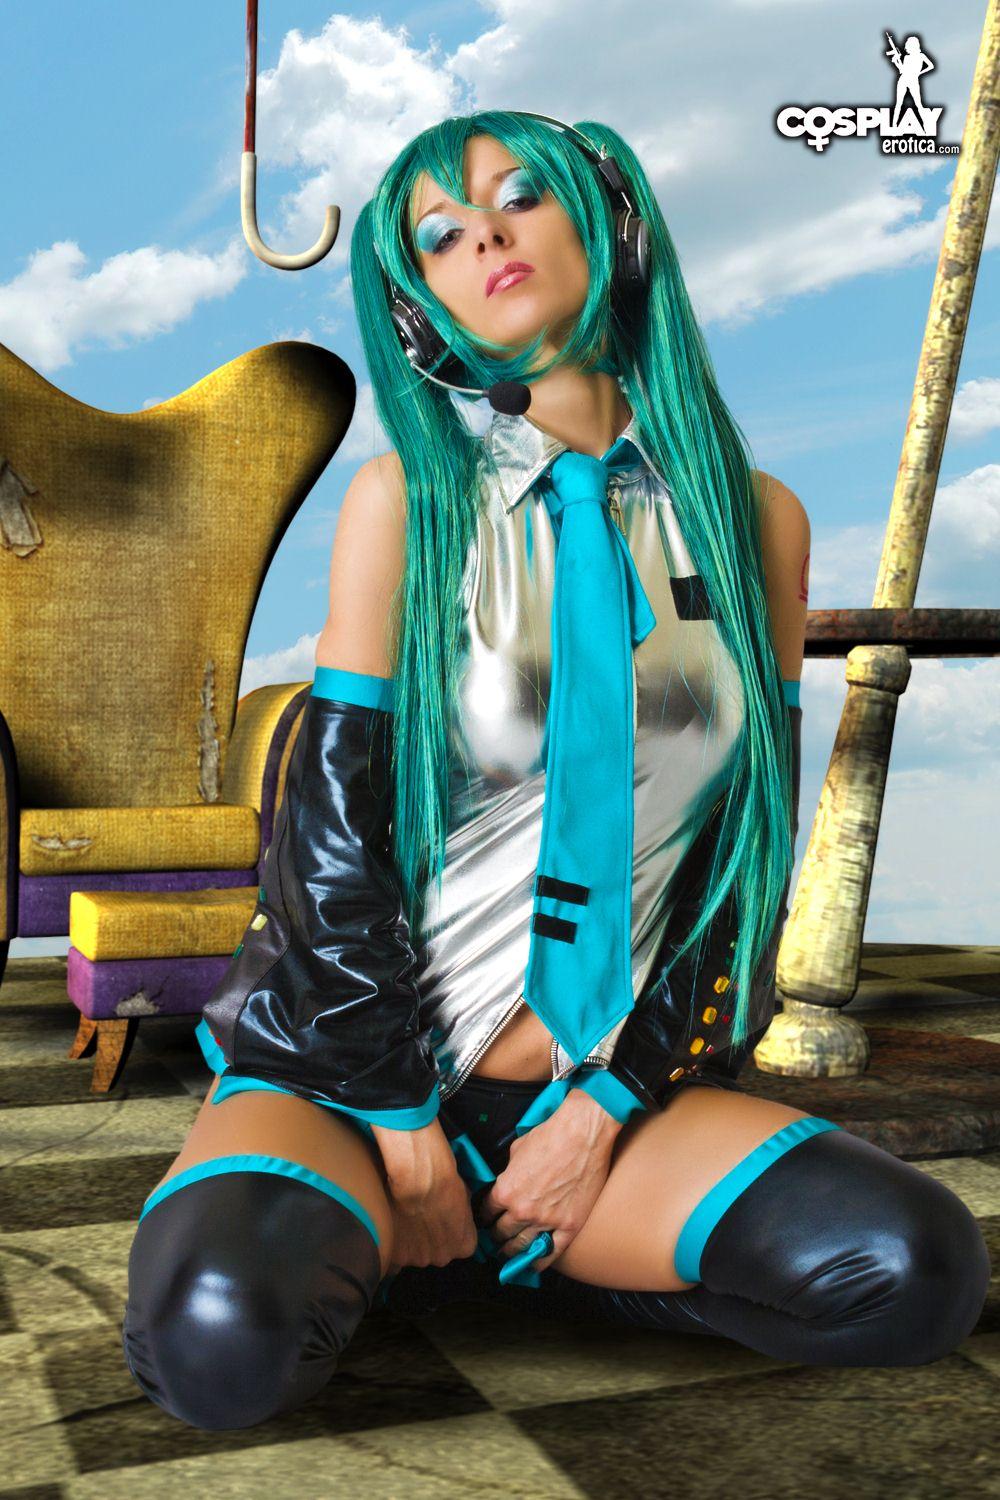 Lana, cosplayeuse coquine, donne une fantaisie sexy d'anime vocaloid.
 #58815070